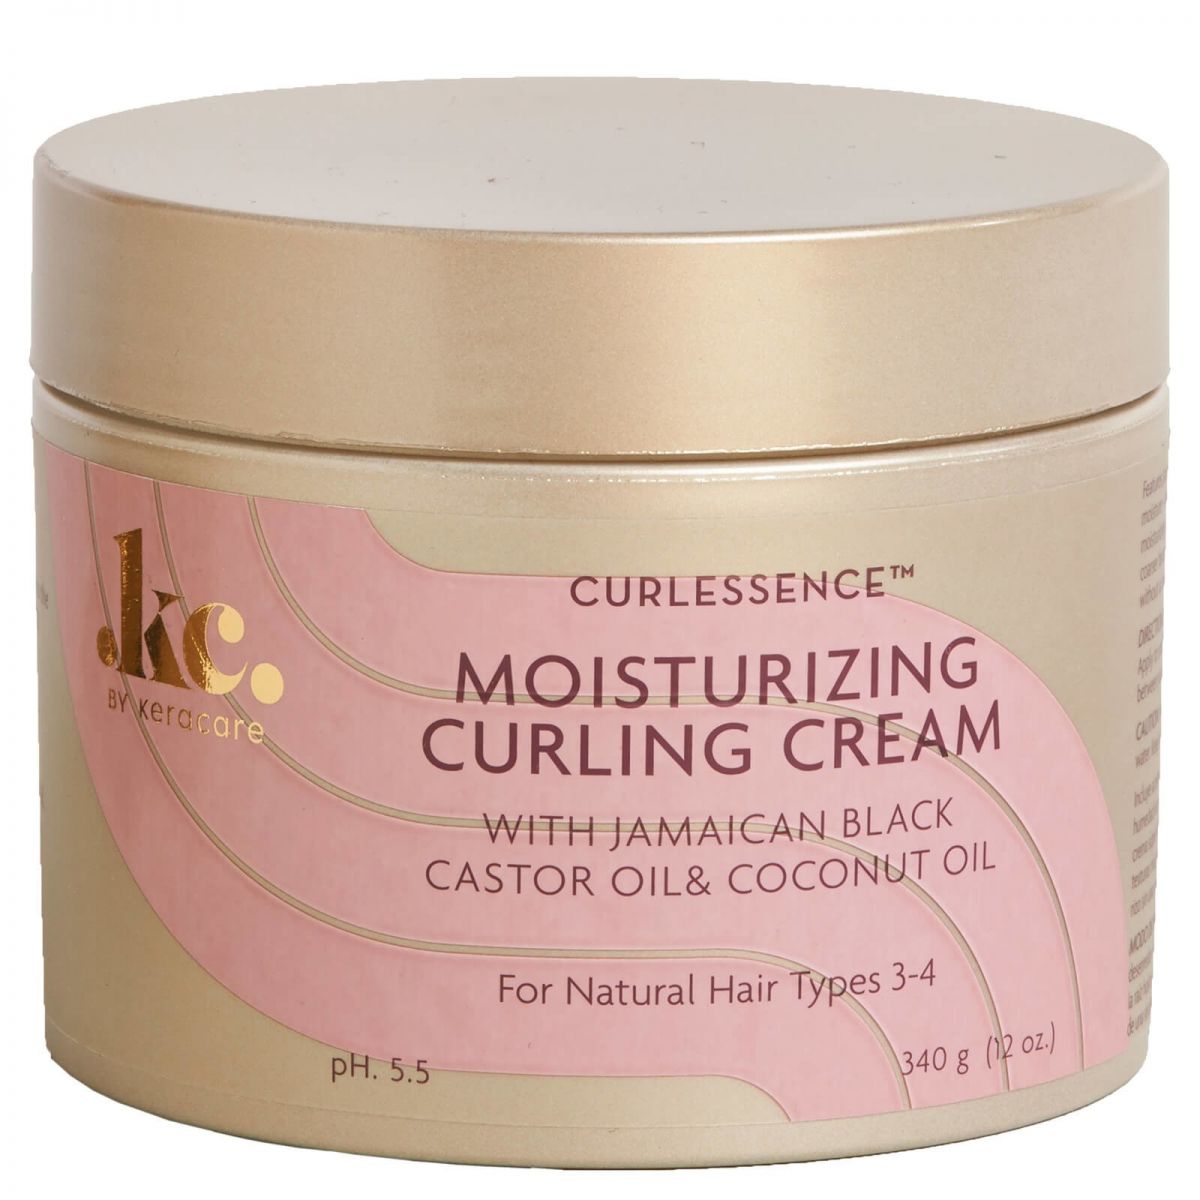 Keracare curlssence moisturizing curling cream 320 gr